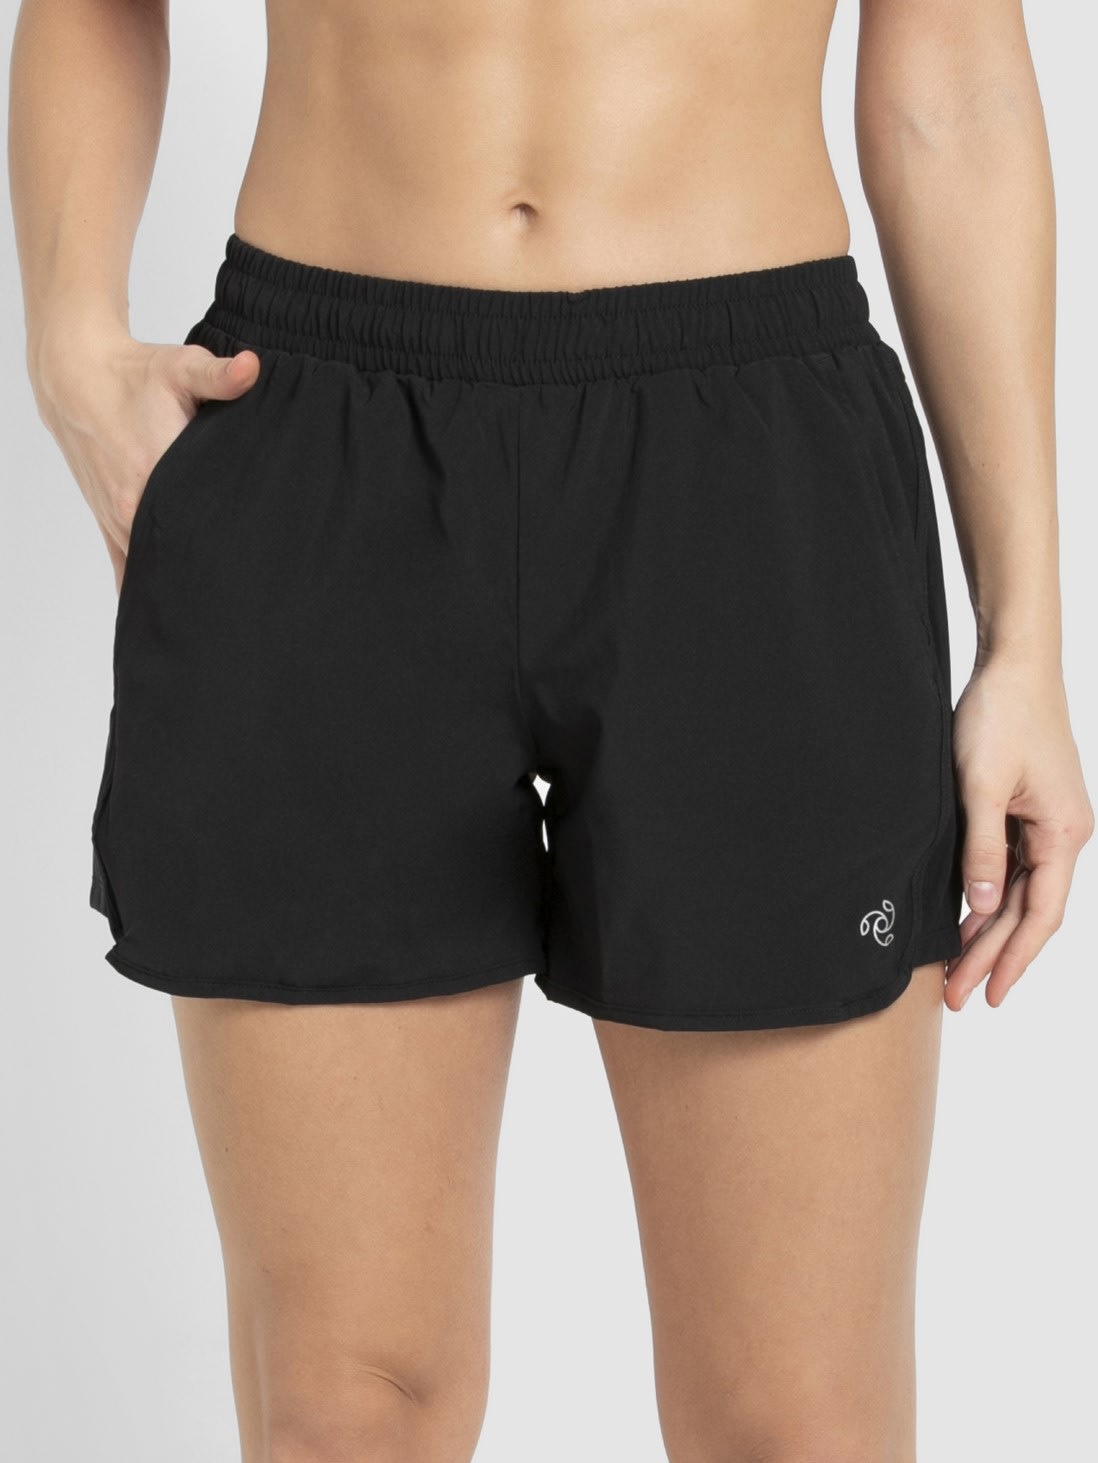 Jockey Women Apparel Bottoms | Black Shorts